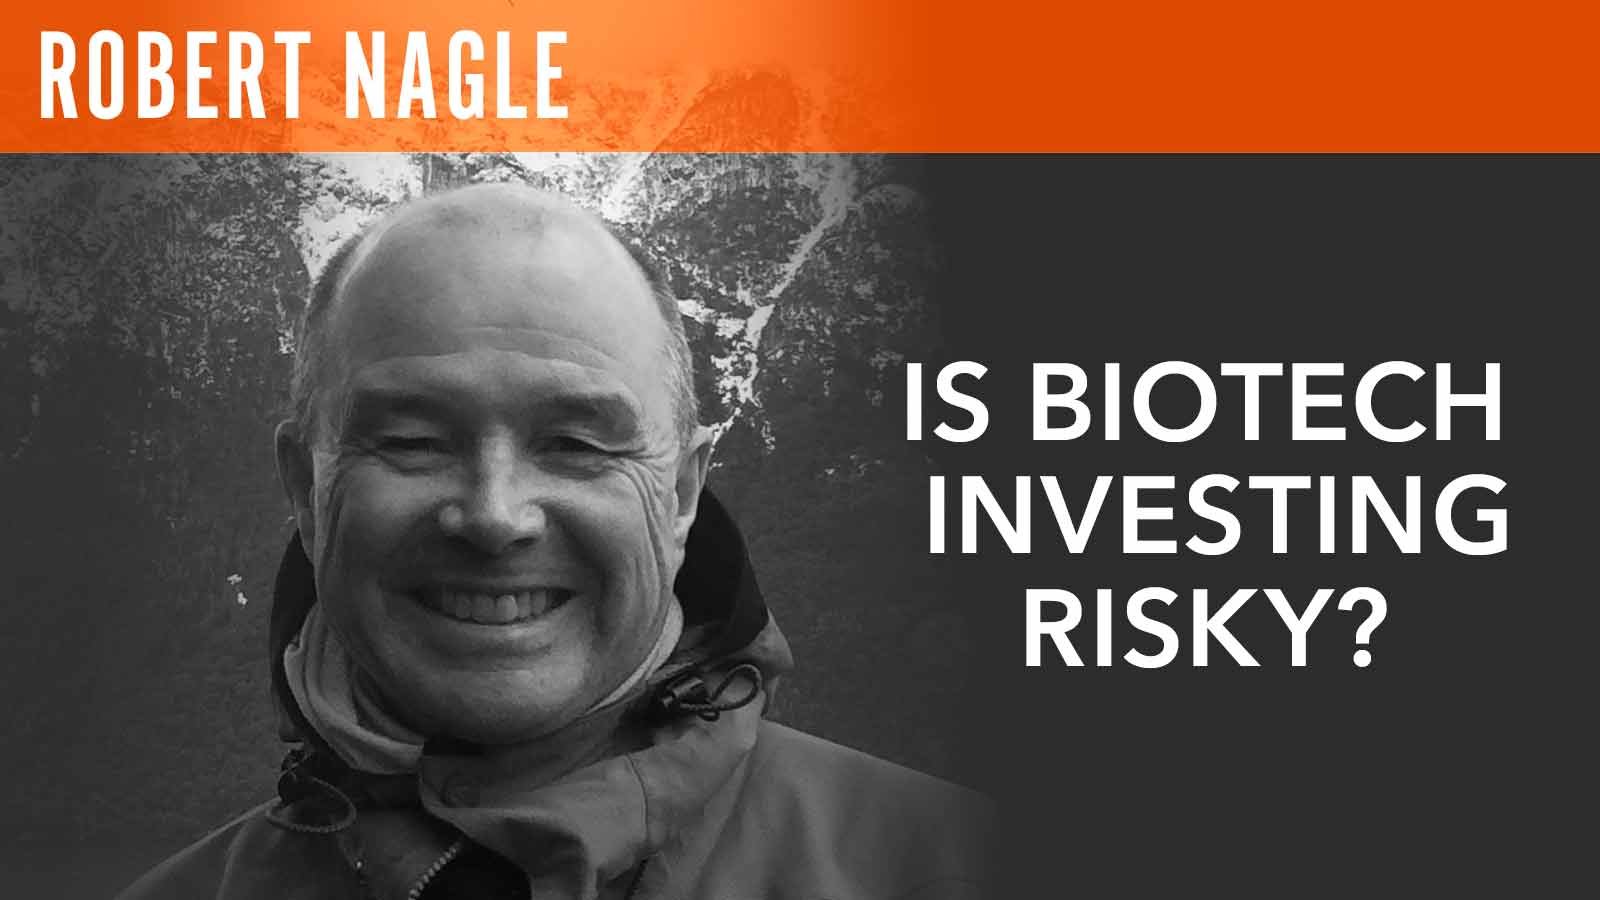 Robert Nagle, "Is Biotech Investing Risky?"